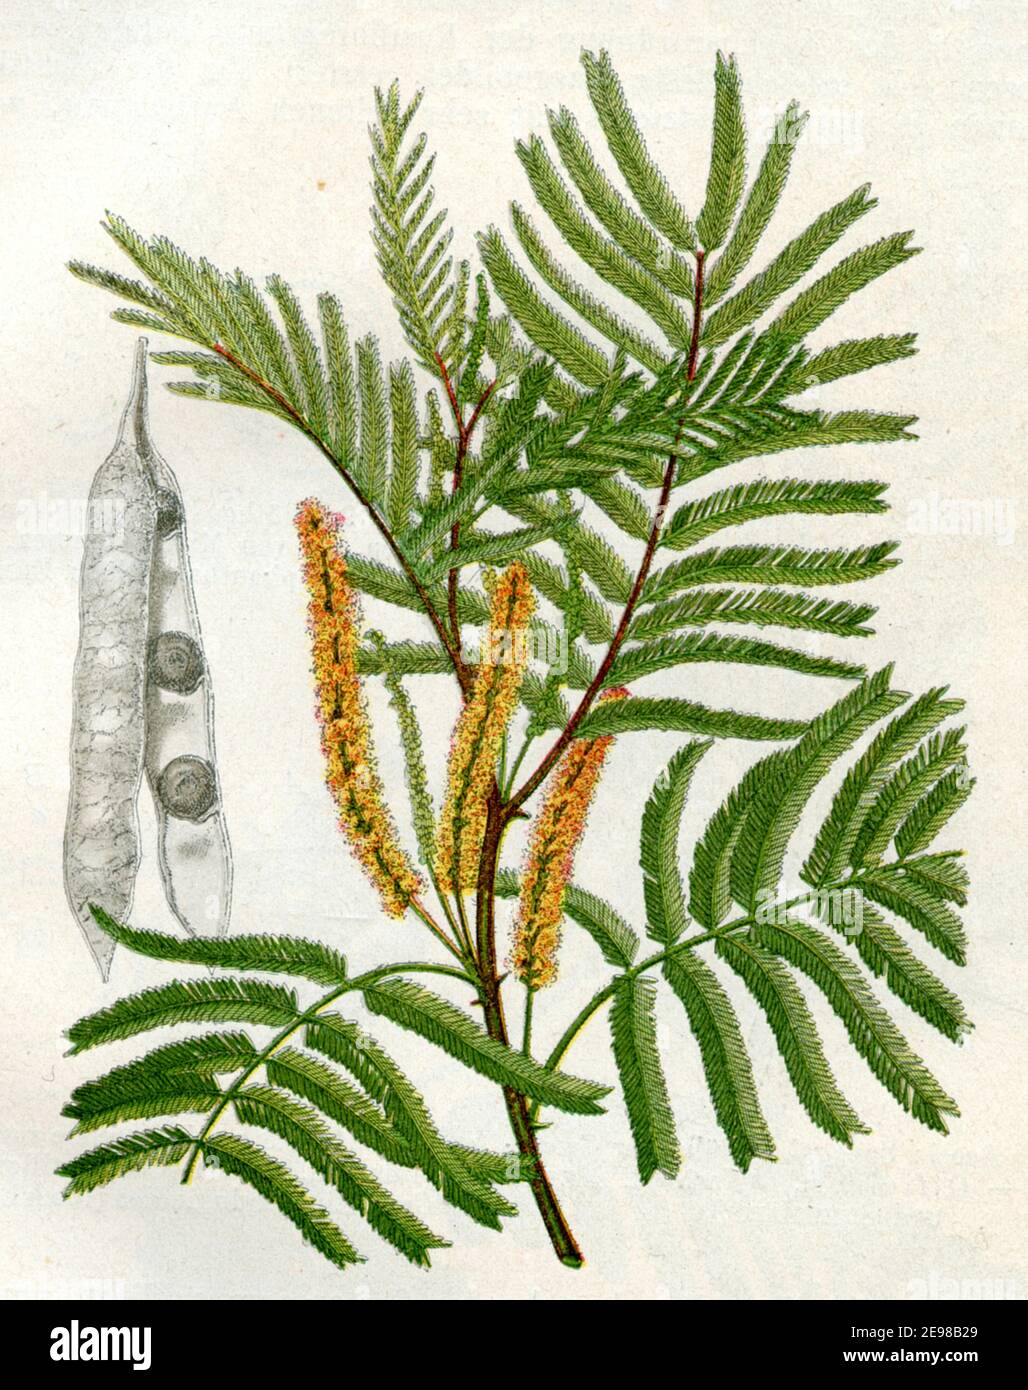 catechu / Senegalia catechu, Syn. Acacia catechu, Acacia wallichiana, Mimosa catechu / Akazie, Gerber-  / botany book, 1900) Stock Photo